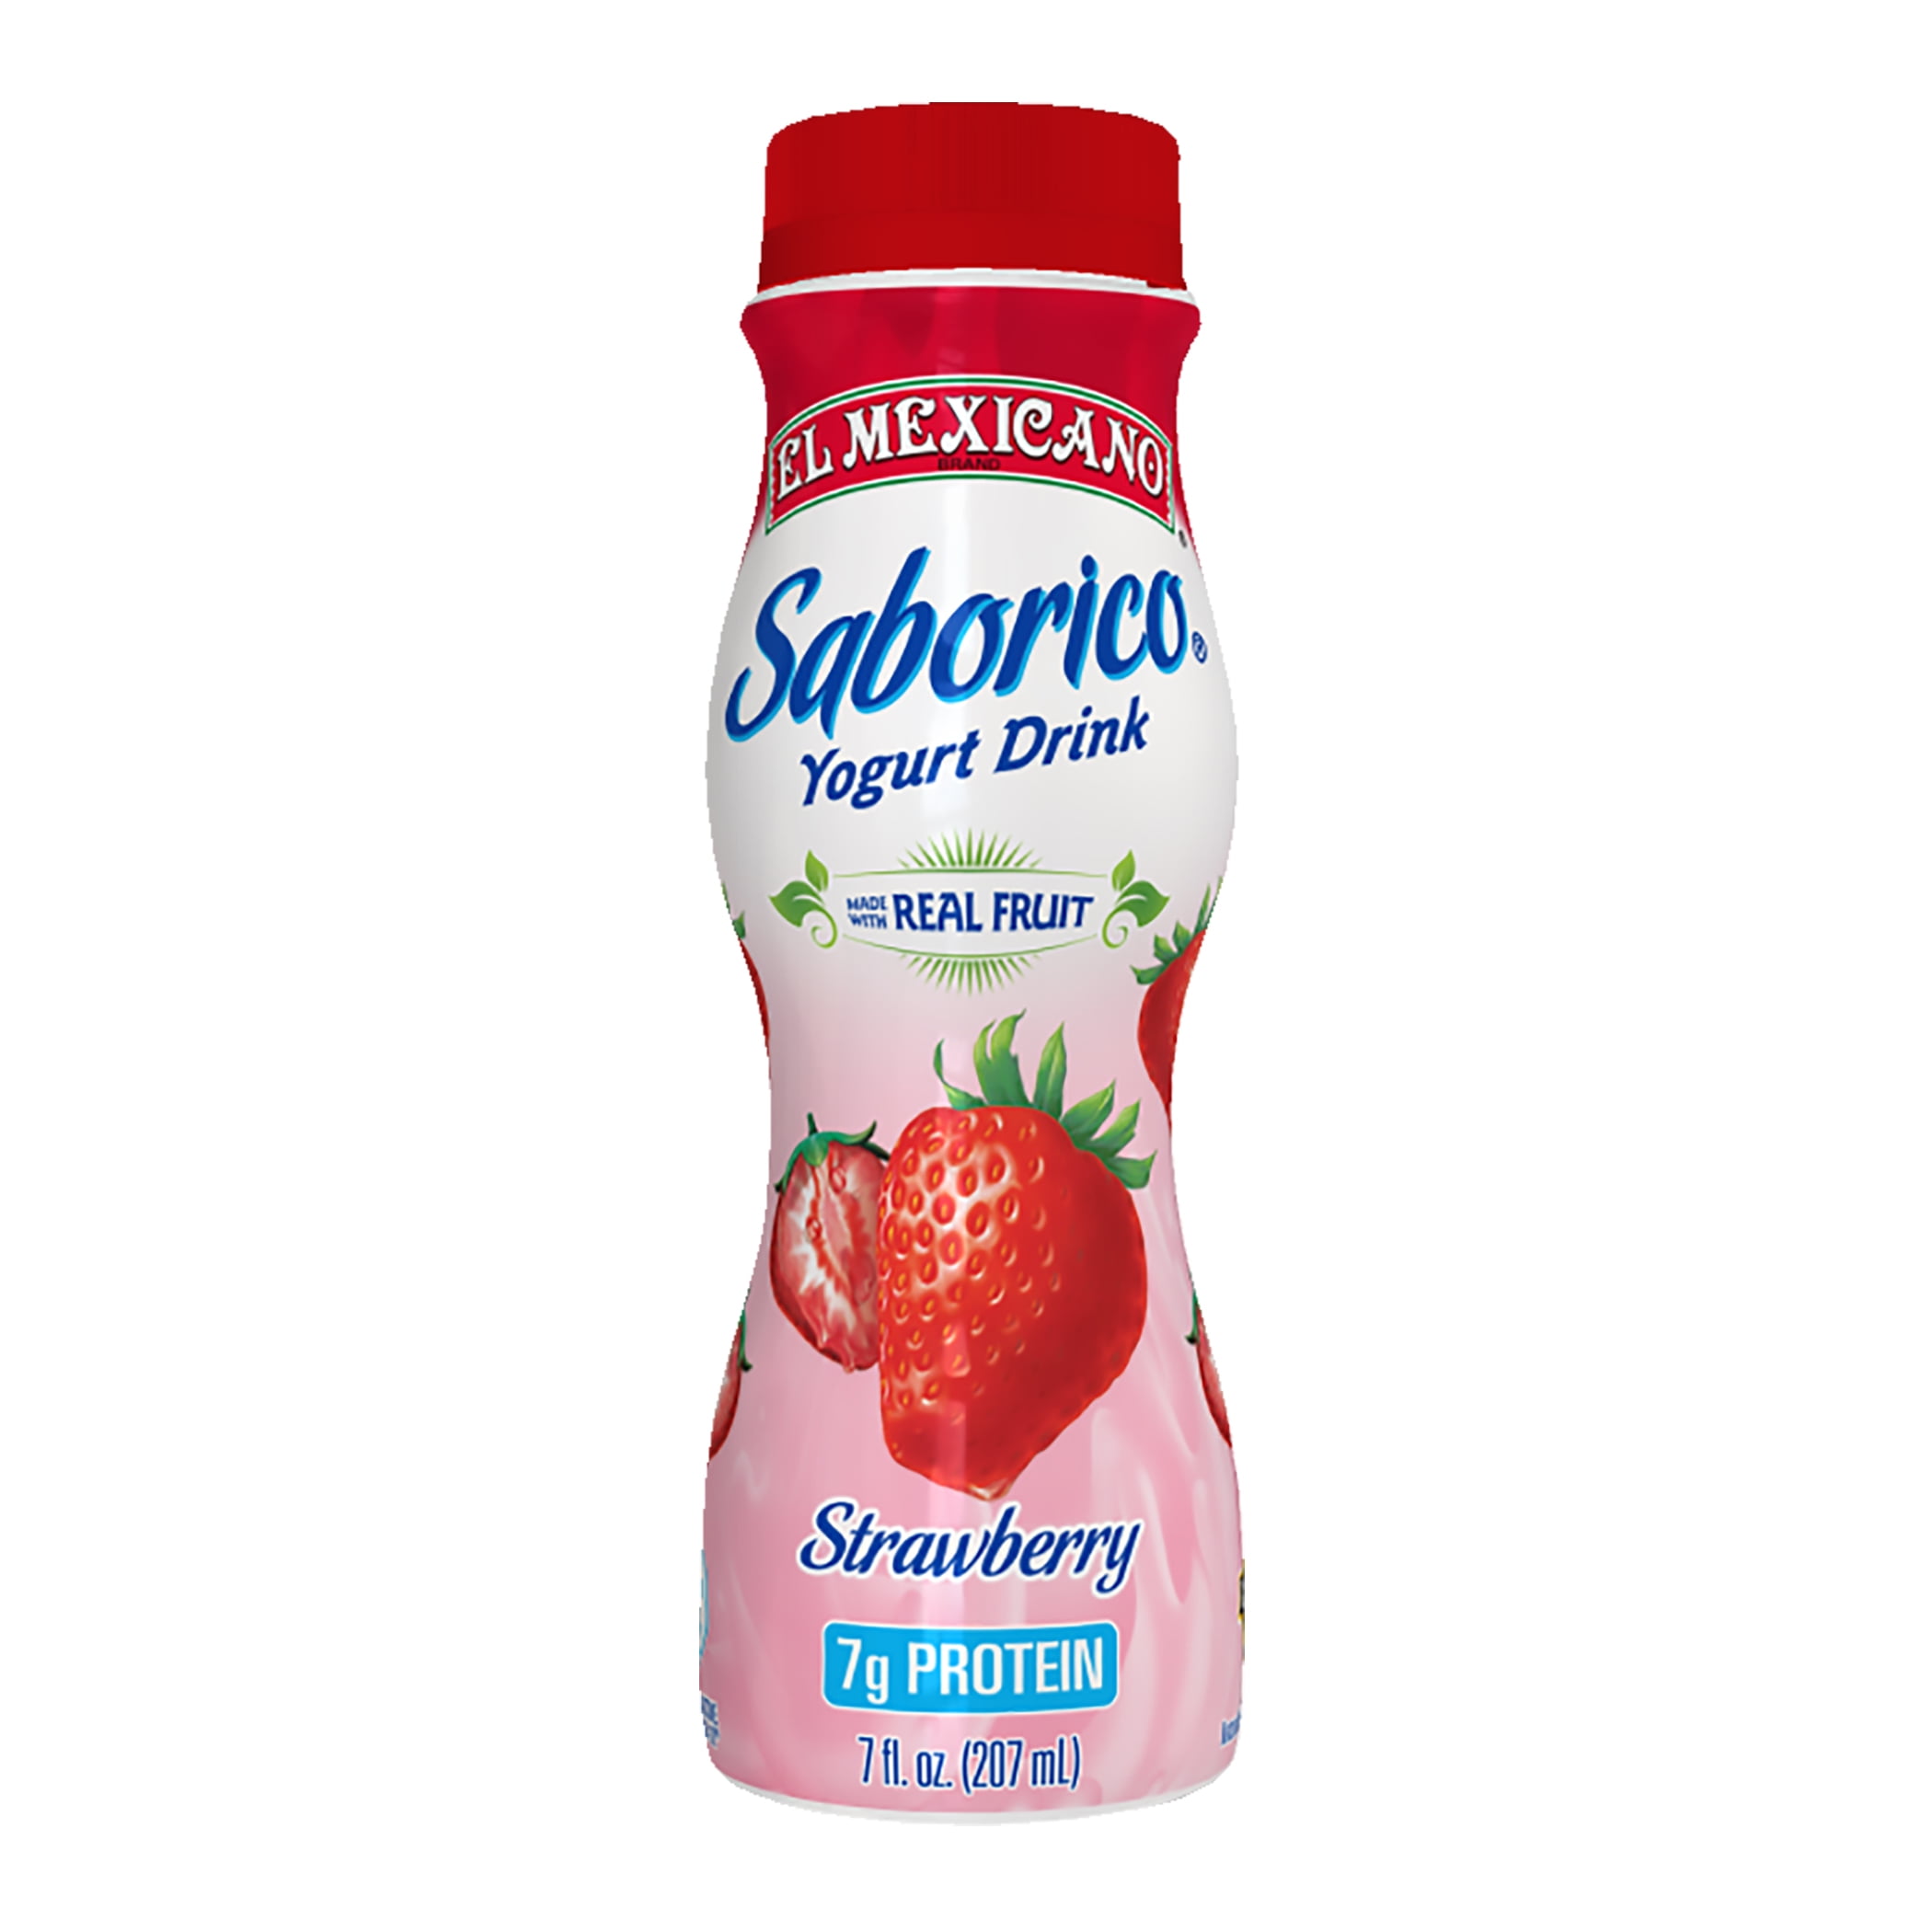 Buy El Mexicano® Saborico® Strawberry yogurt drink 7 fl. oz. bottle ...